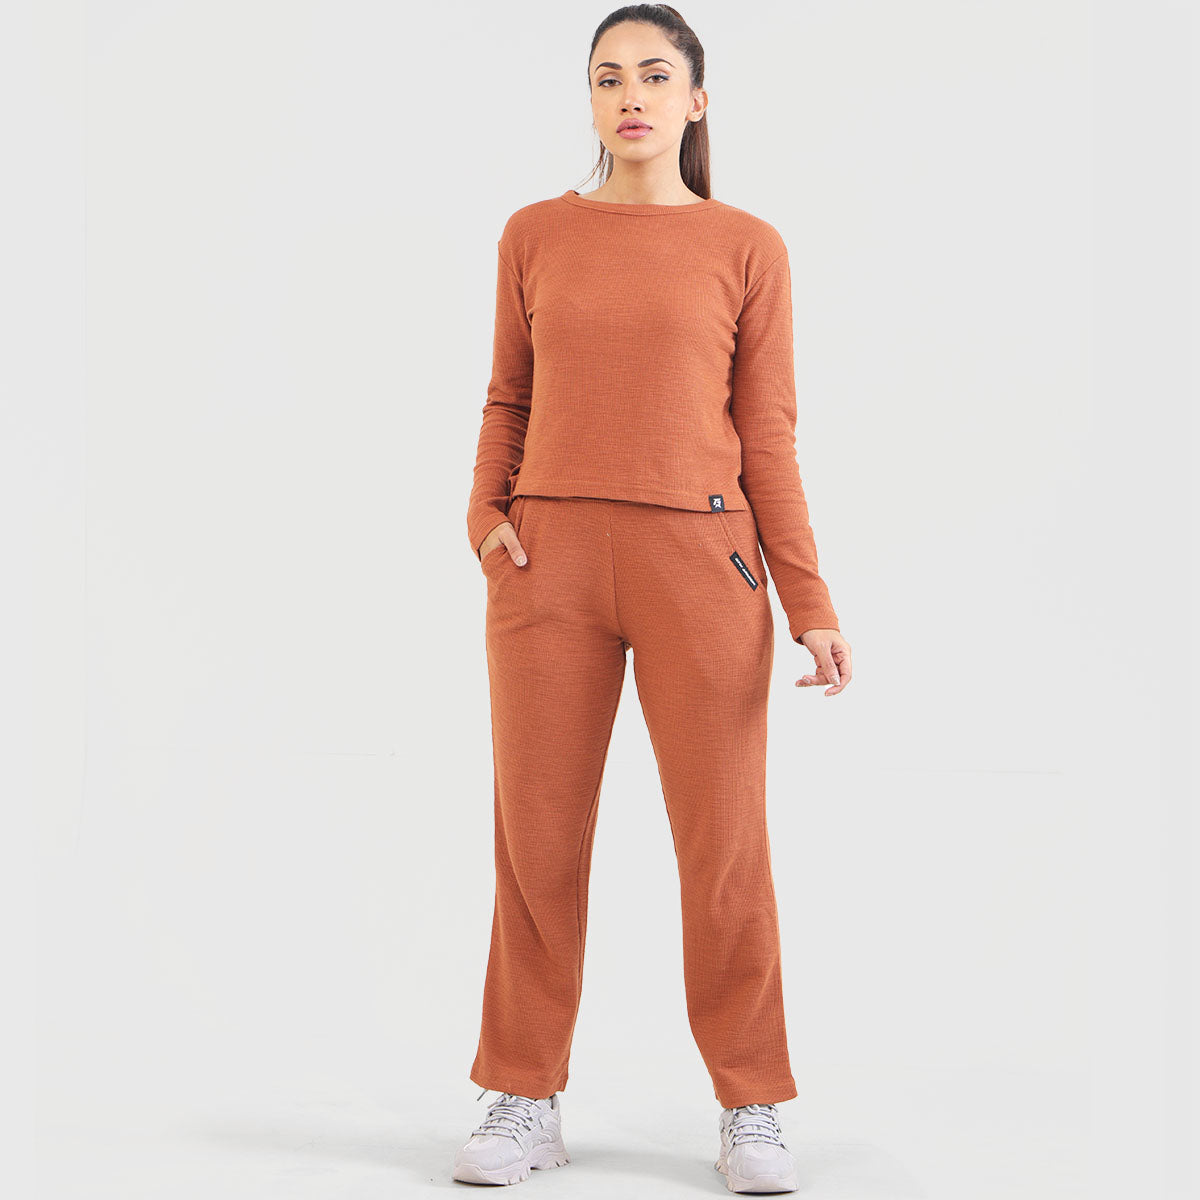 GA Allure Trousers (Orange)